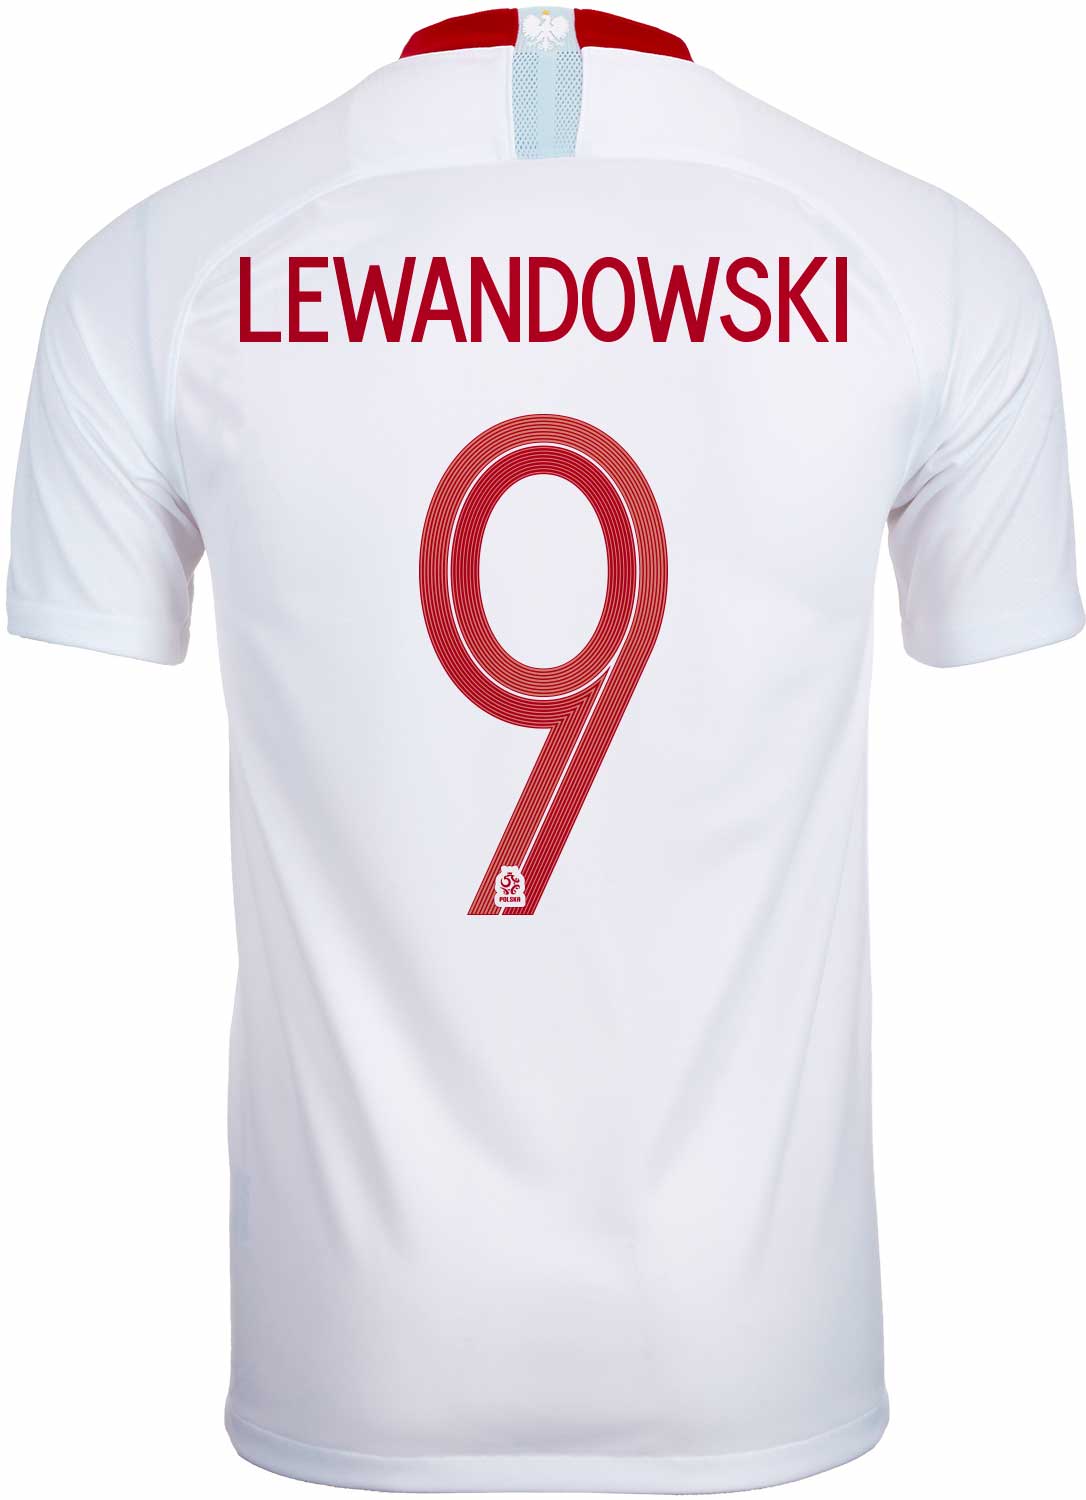 Robert Lewandowski Poland jersey